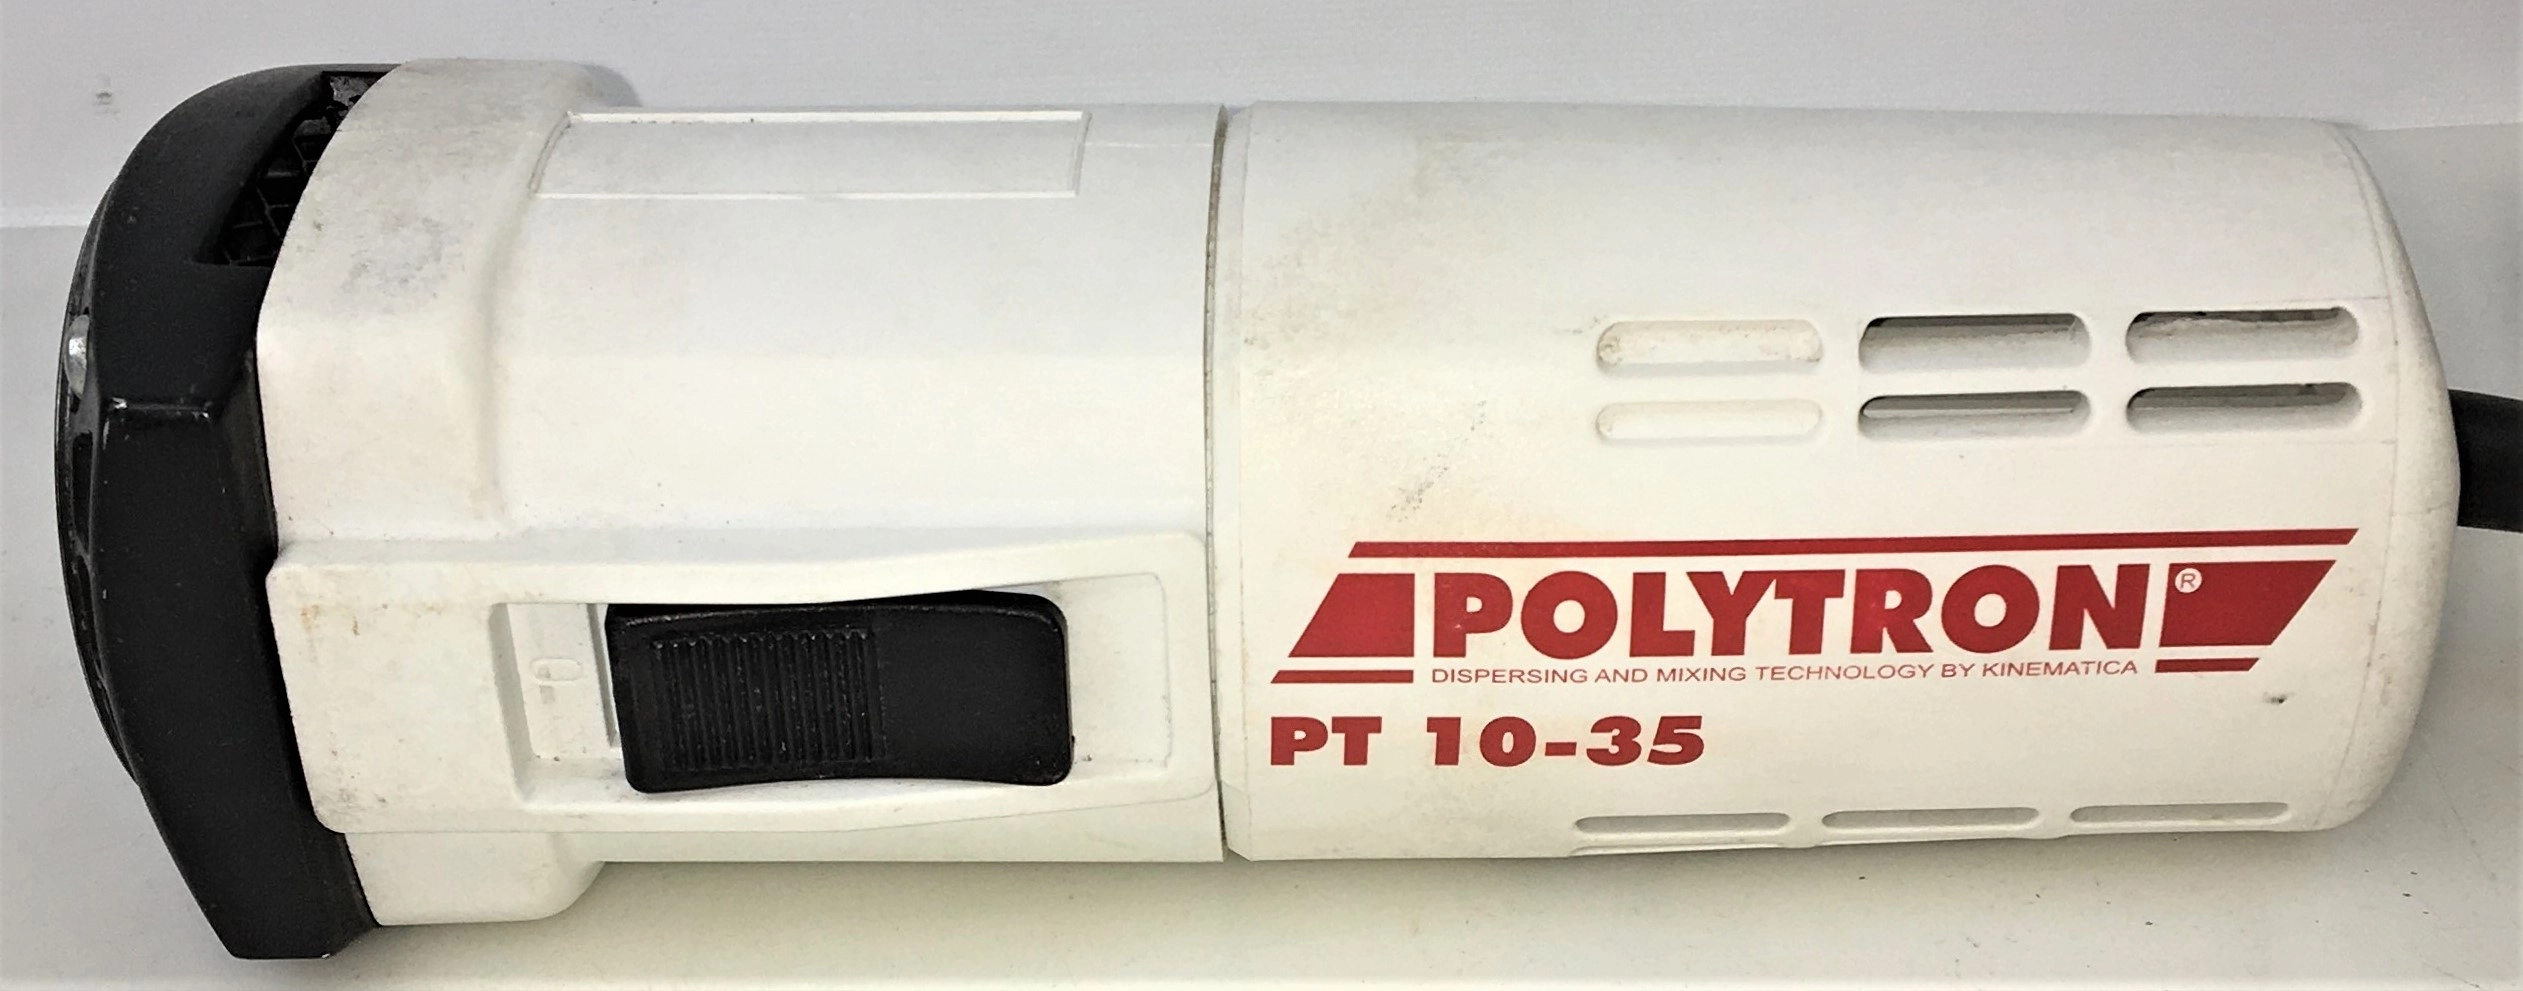 Kinematica Polytron PT 10-35 Blade-type Homogenizer